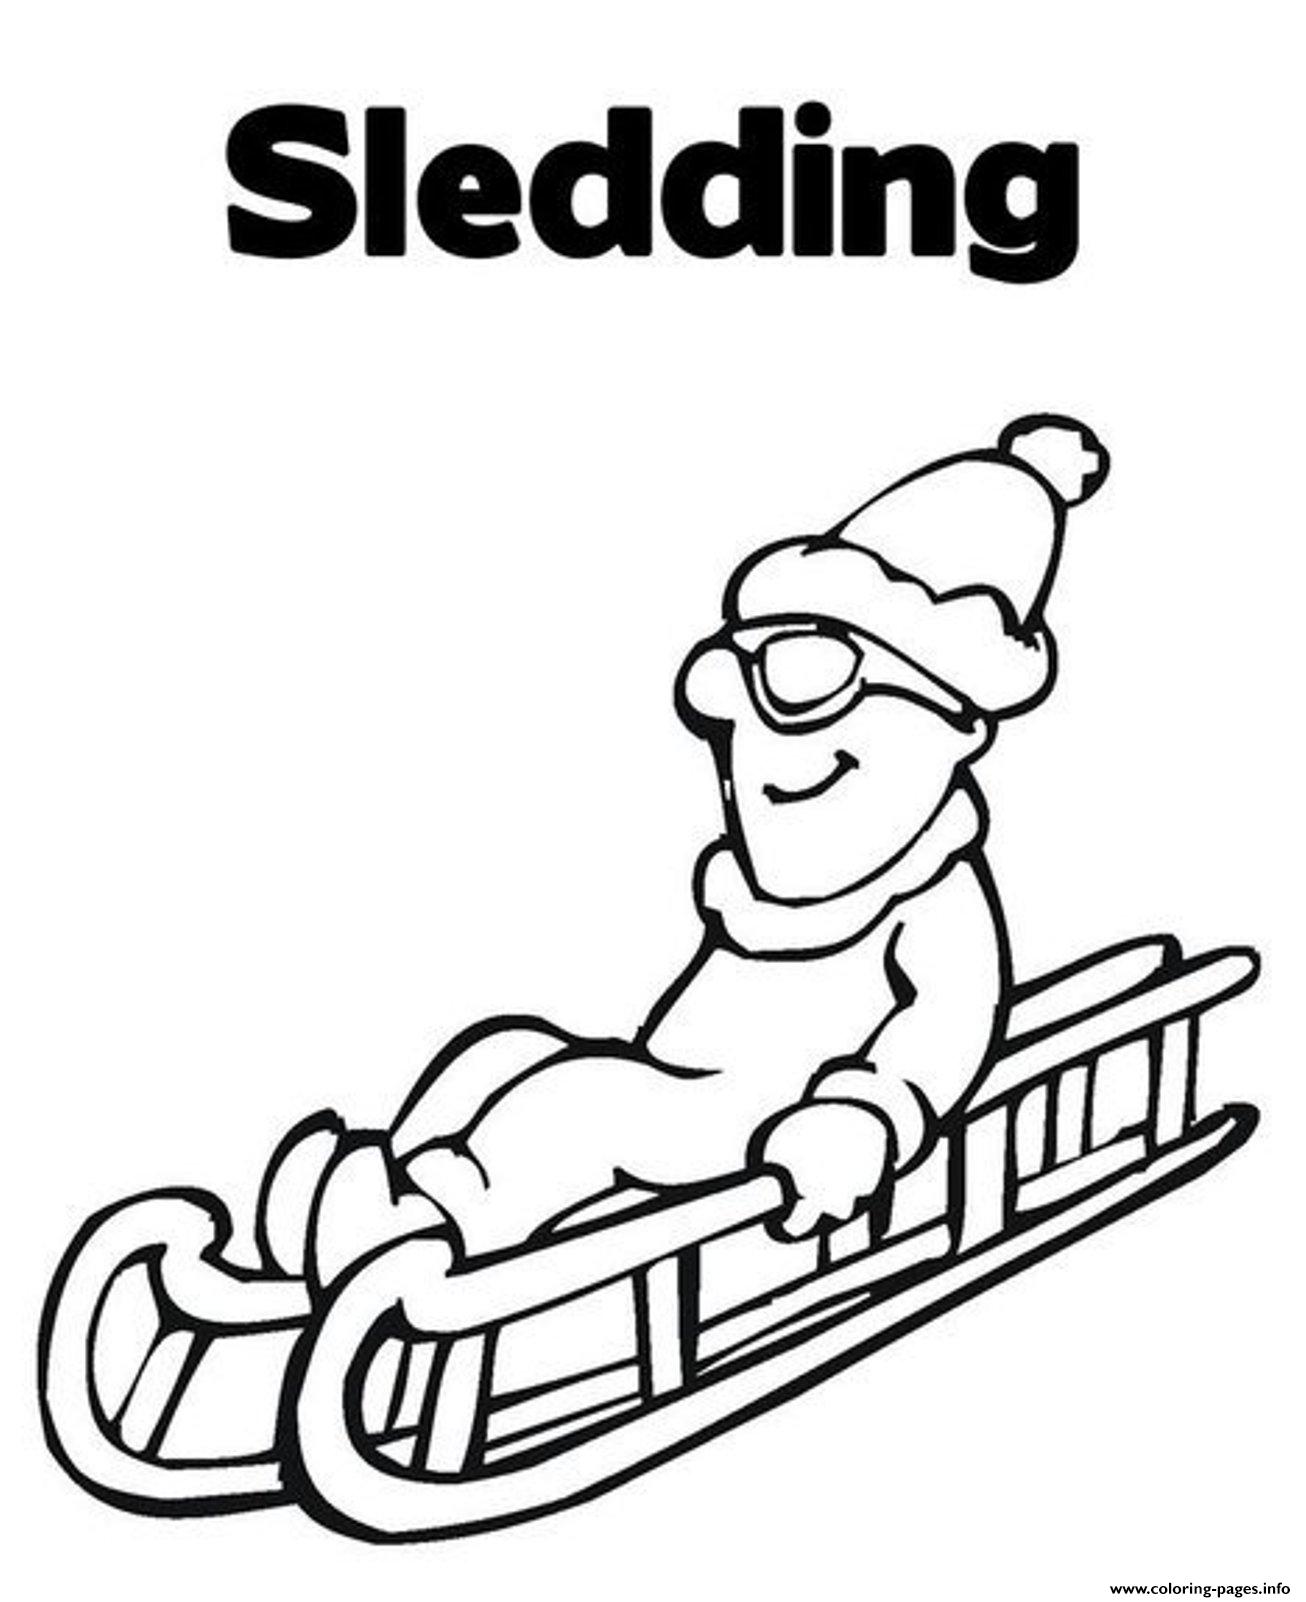 Winter sledding funf coloring page printable